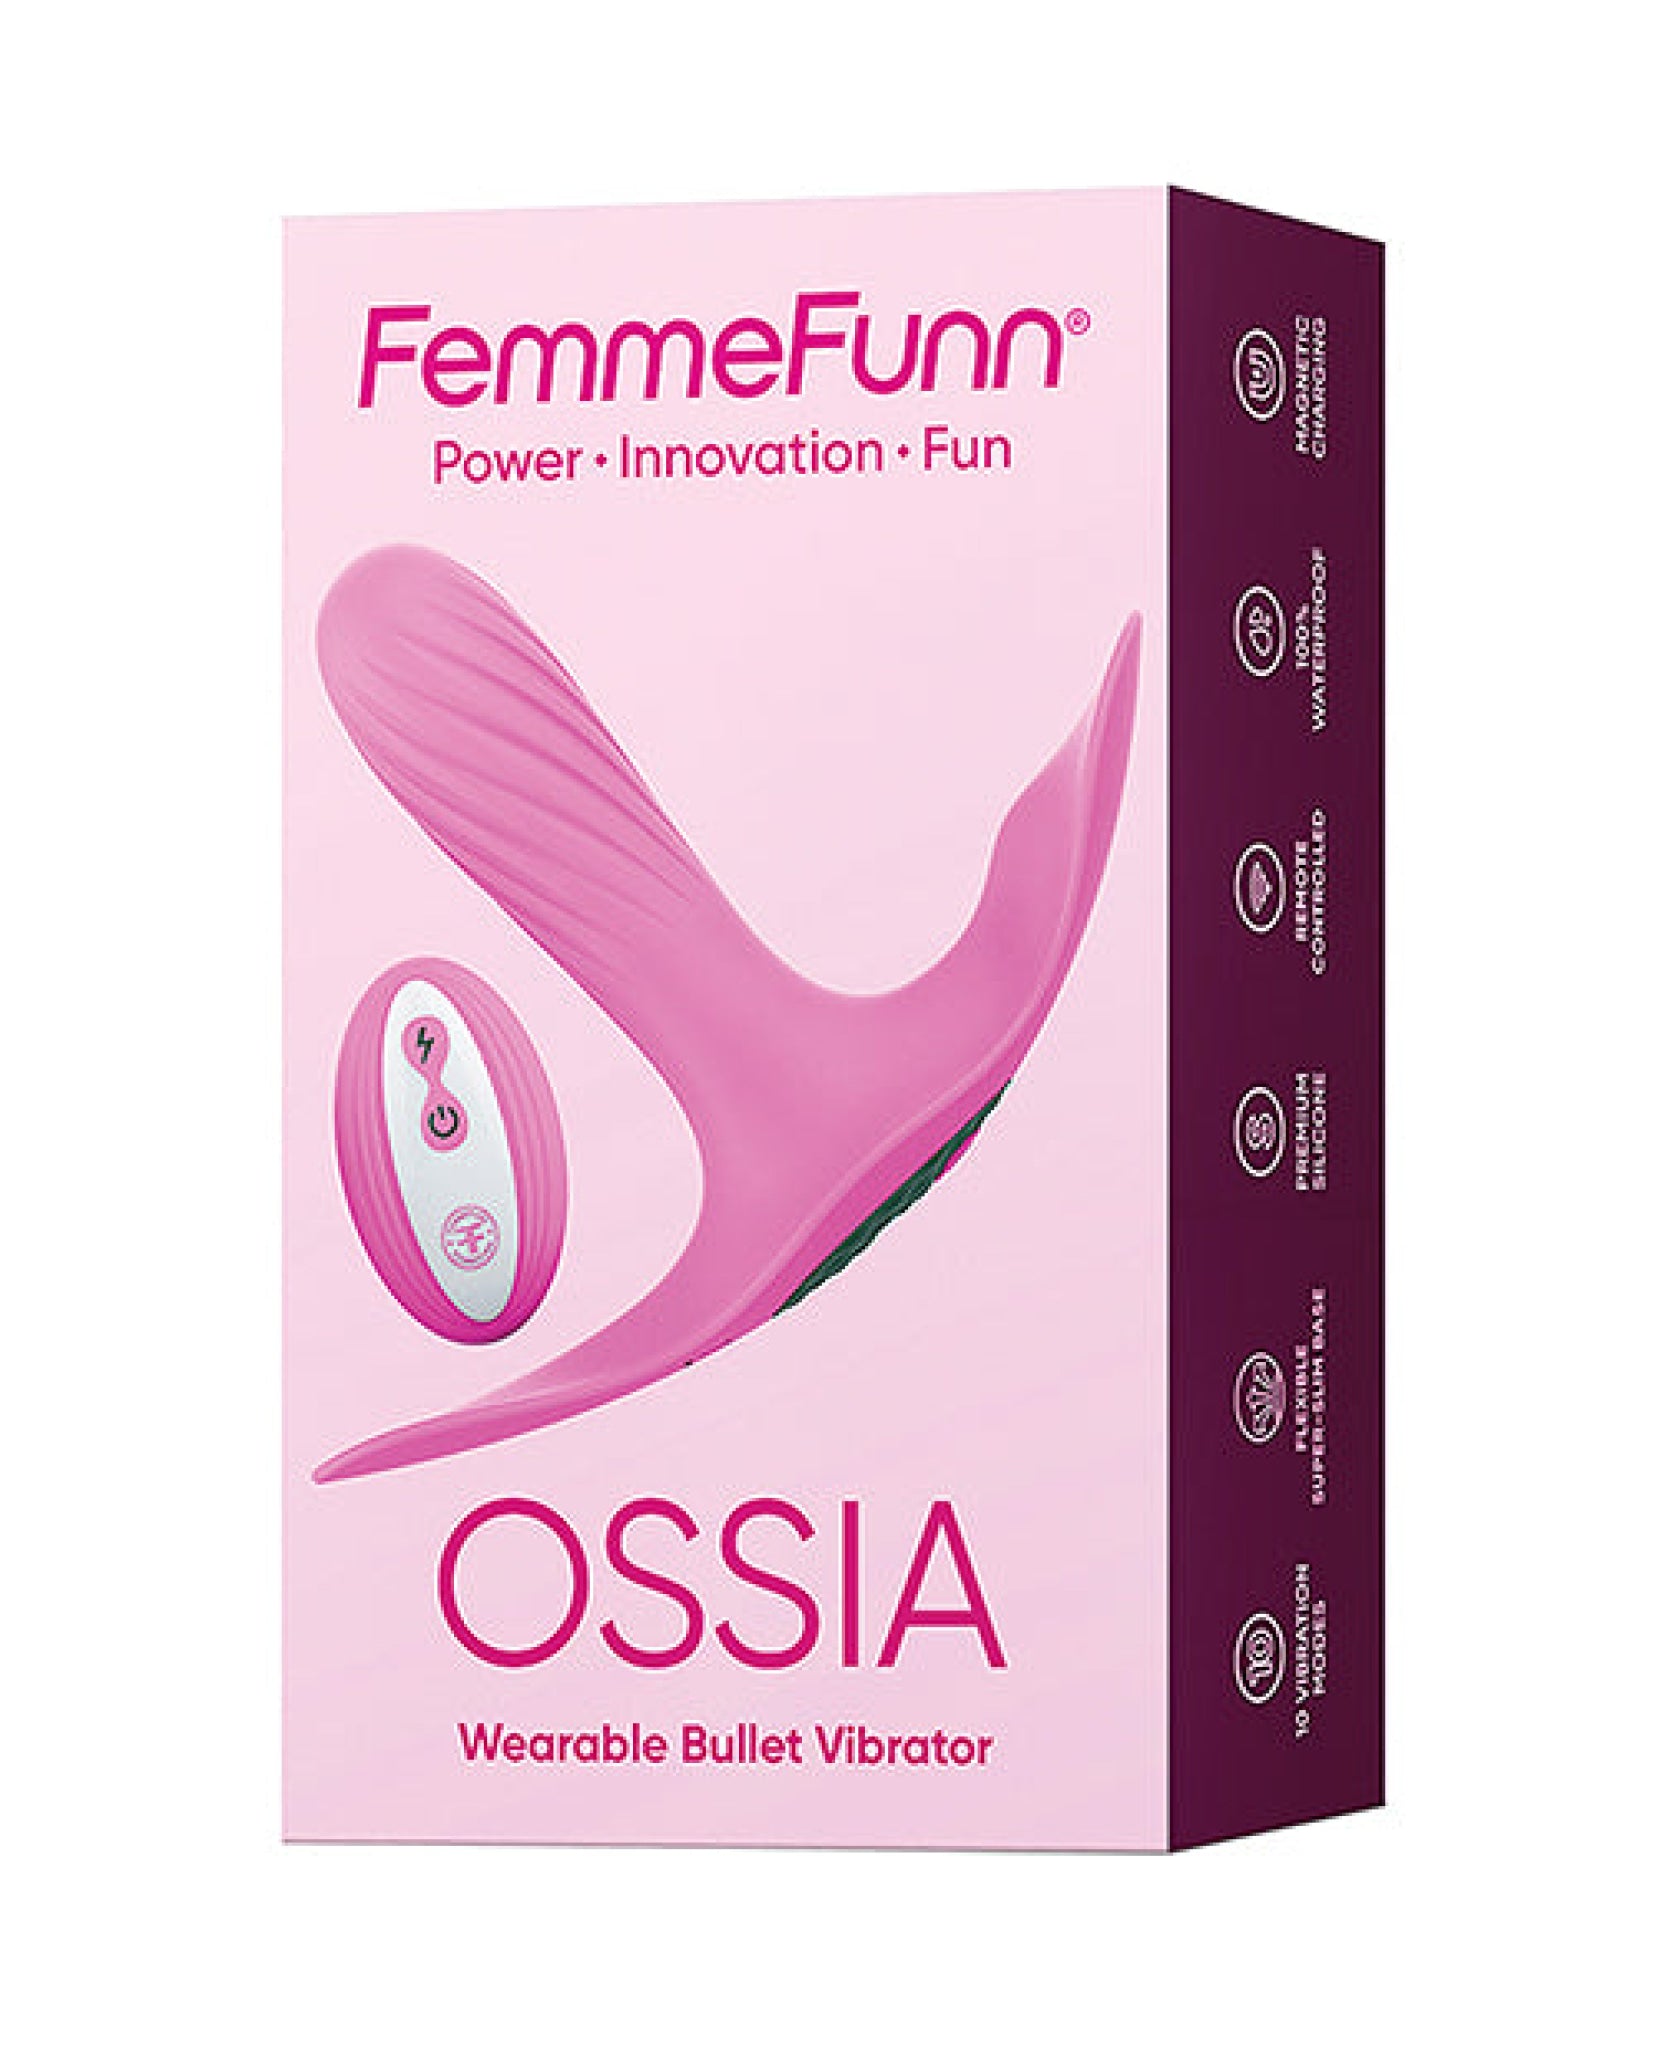 Femme Funn Ossia Wearable Vibrator Femme Fun